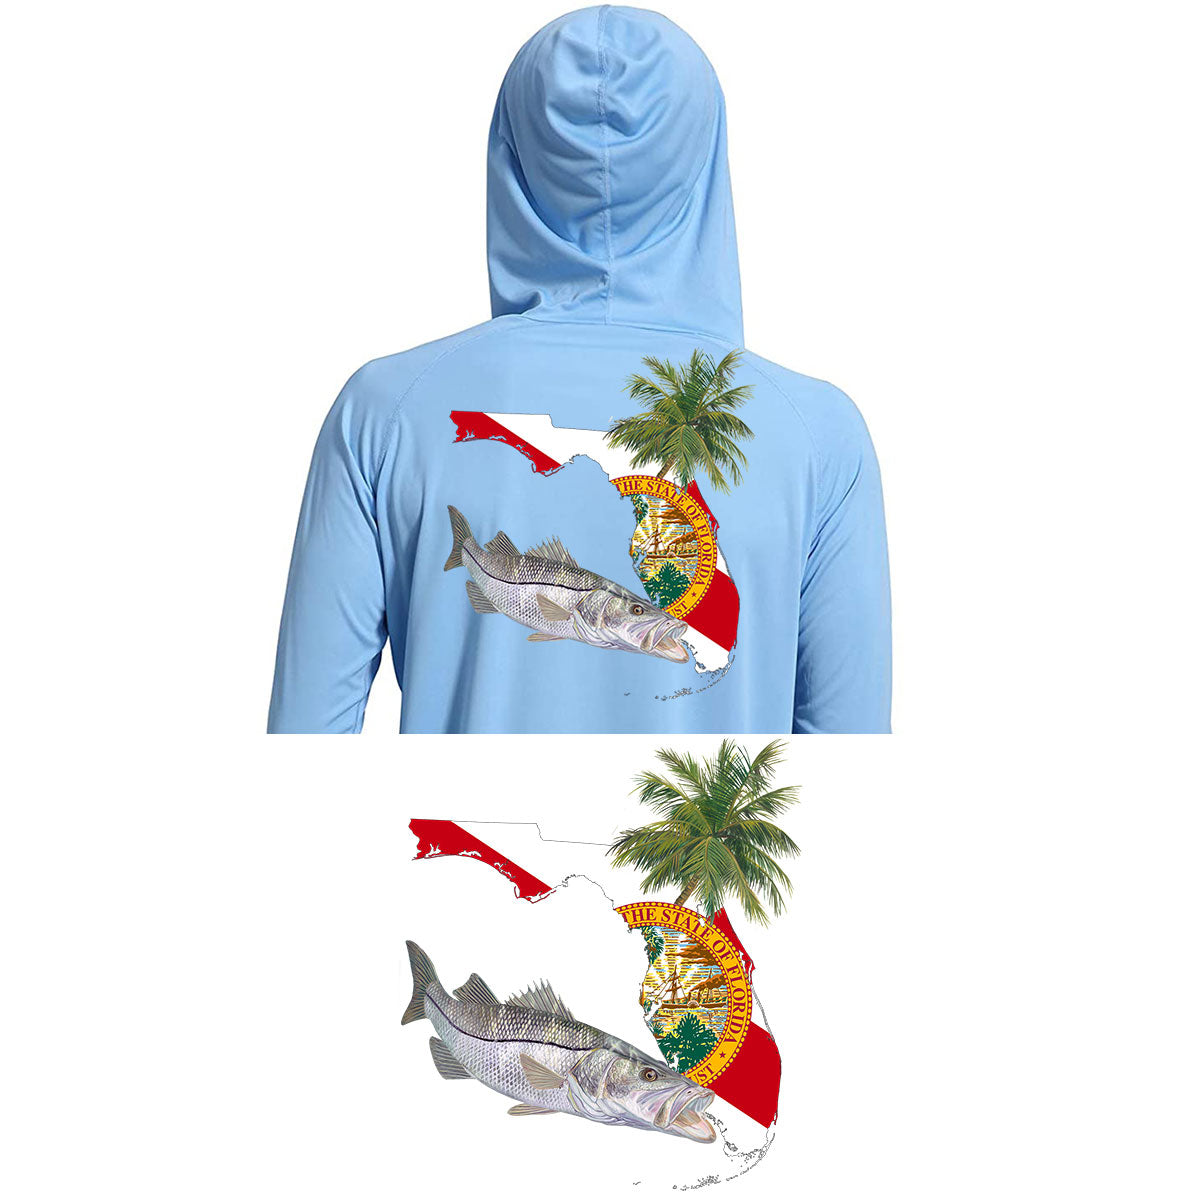 Hoodie Snook Florida Fishing Shirt Optional Florida Flag Sleeve Small / Ice Blue